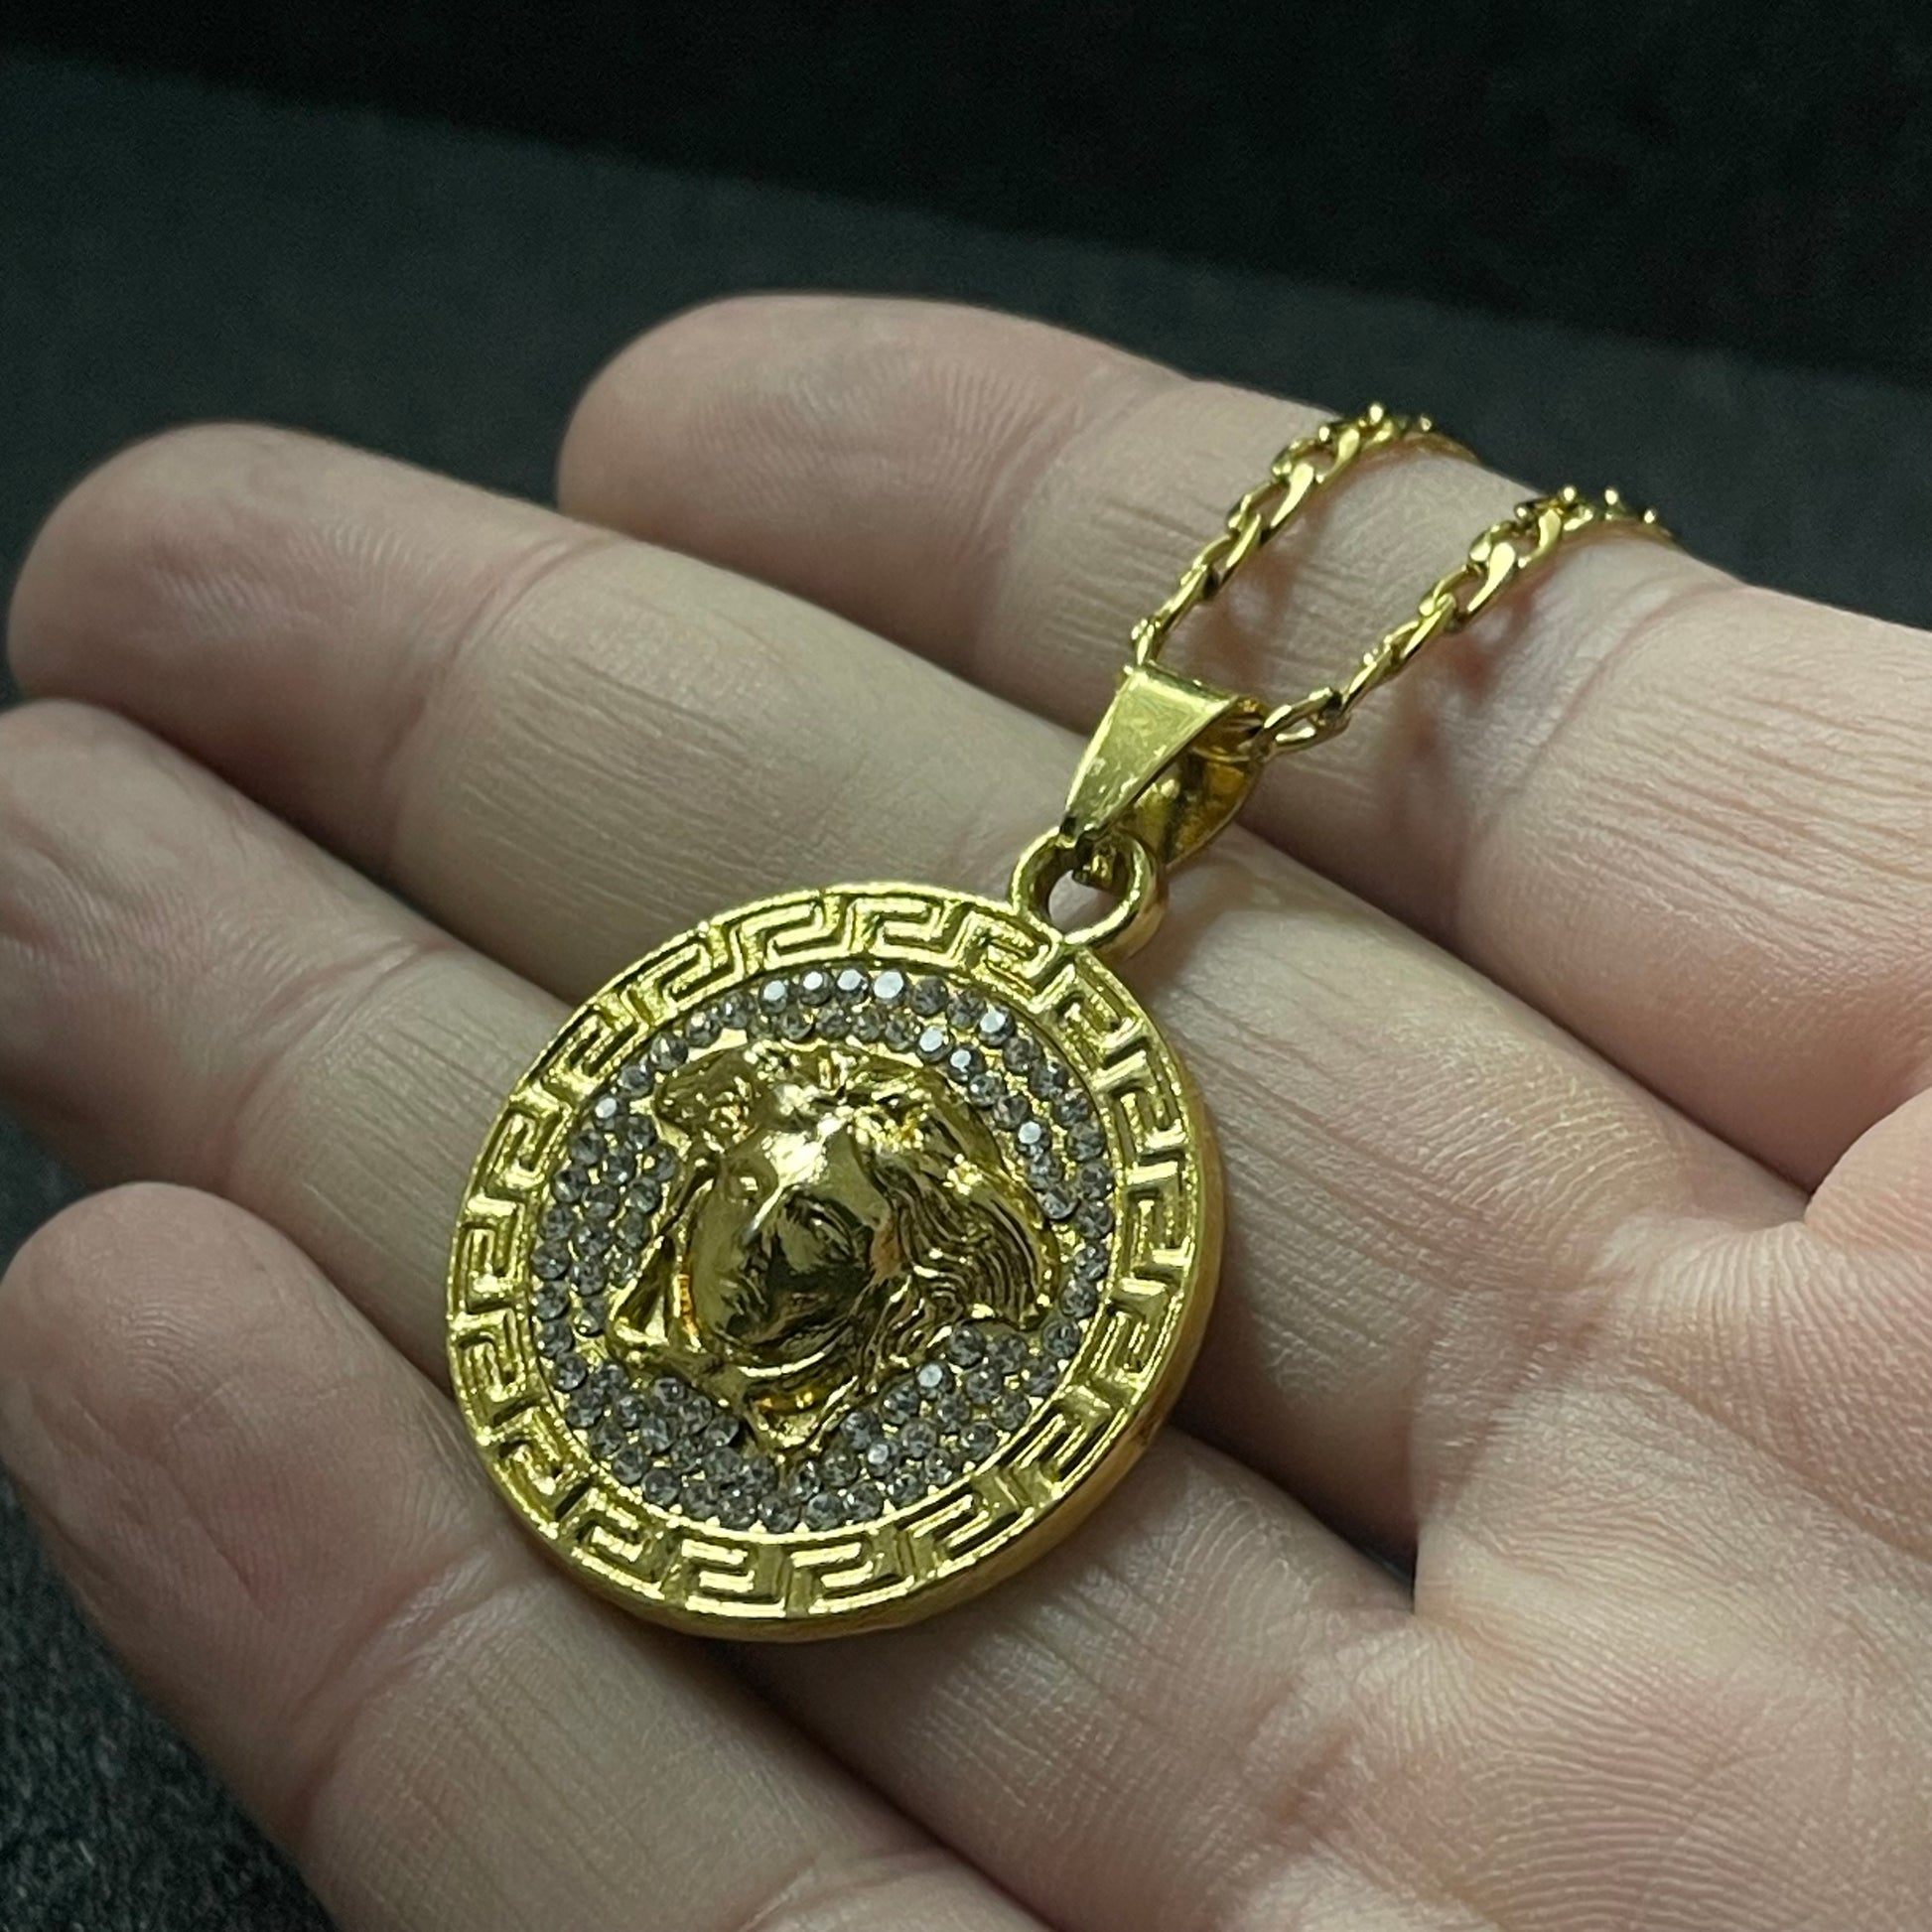 golden iced out medusa pendant necklace for men women in pakistan